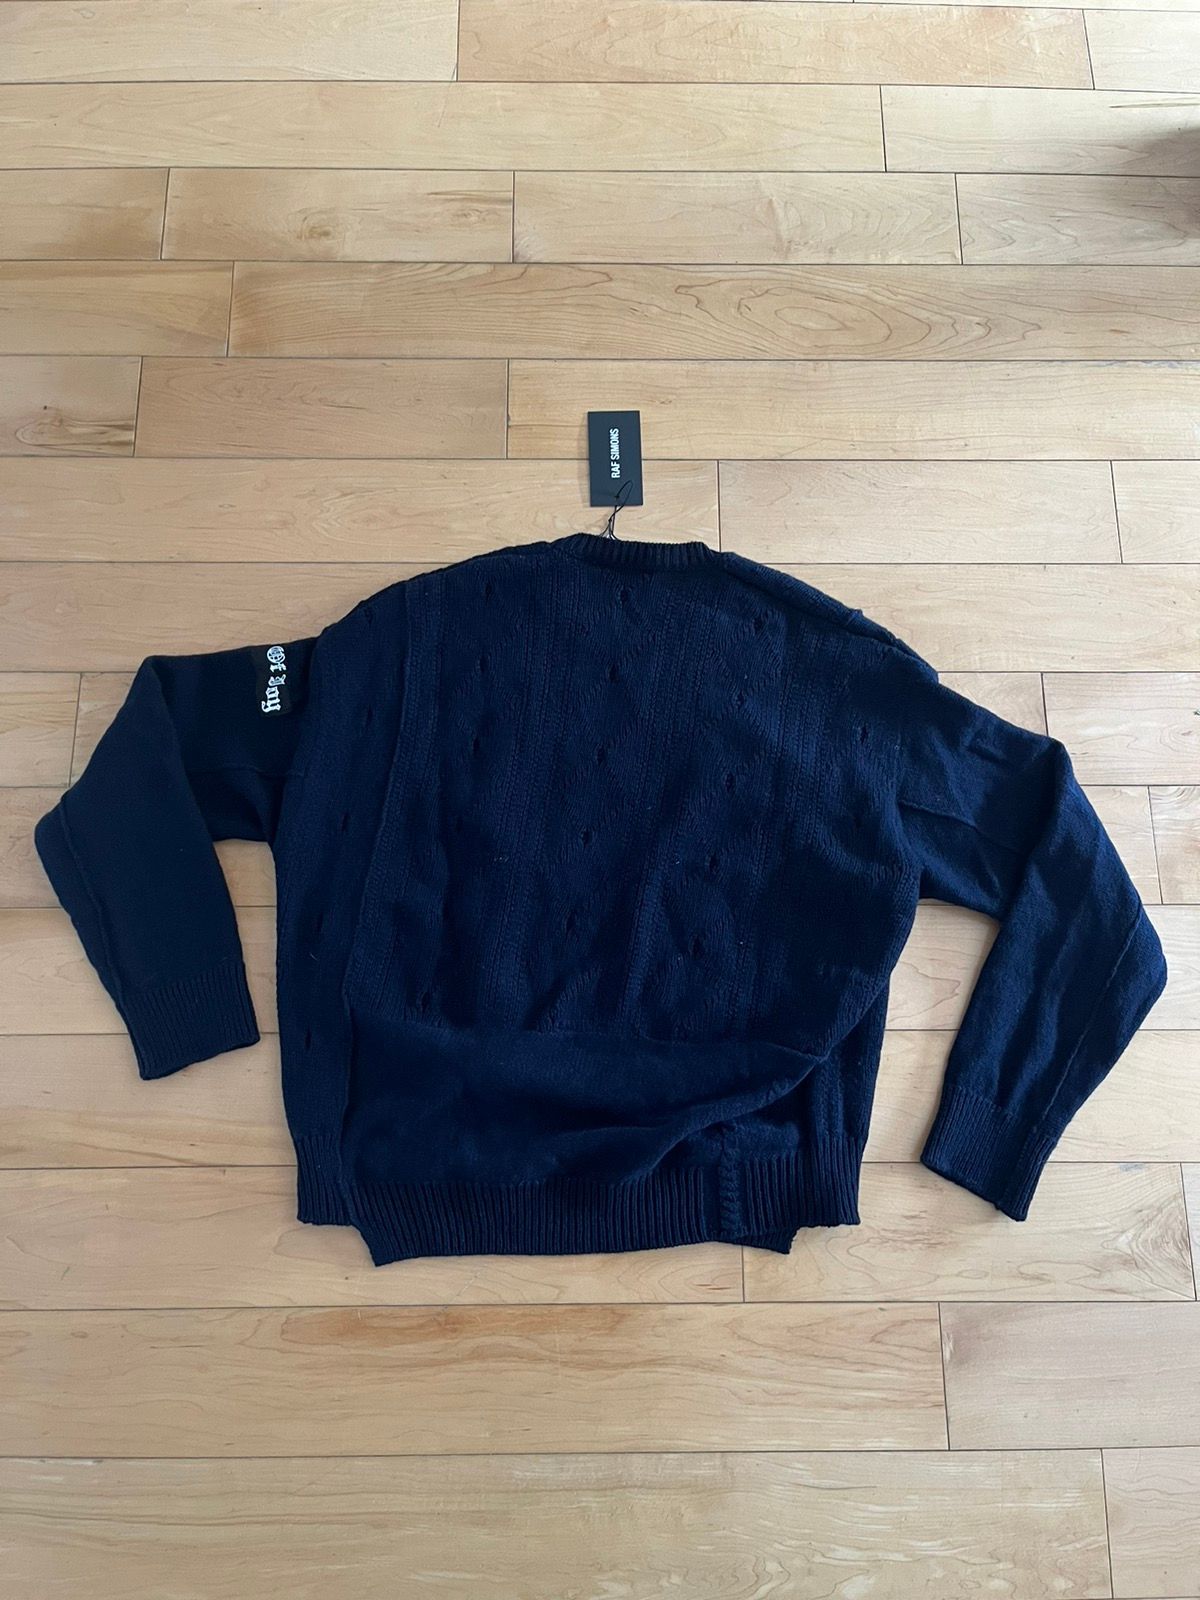 NWT - Raf Simons Reverse braid Sweater with Pins - 2